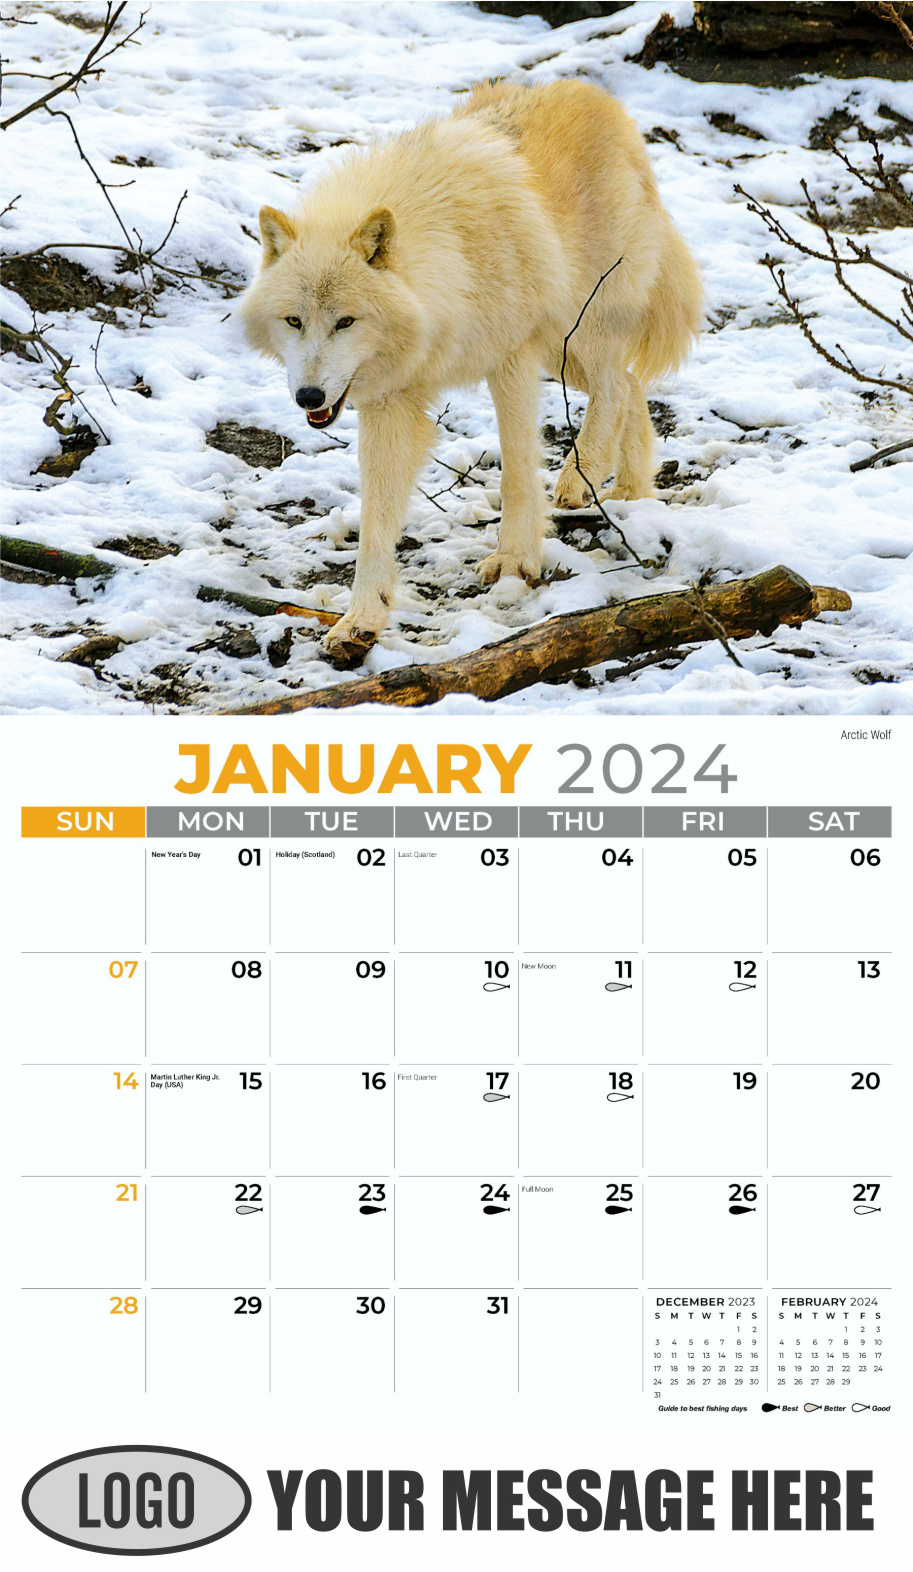 North American Wildlife 2024 Business Promo Wall Calendar - January